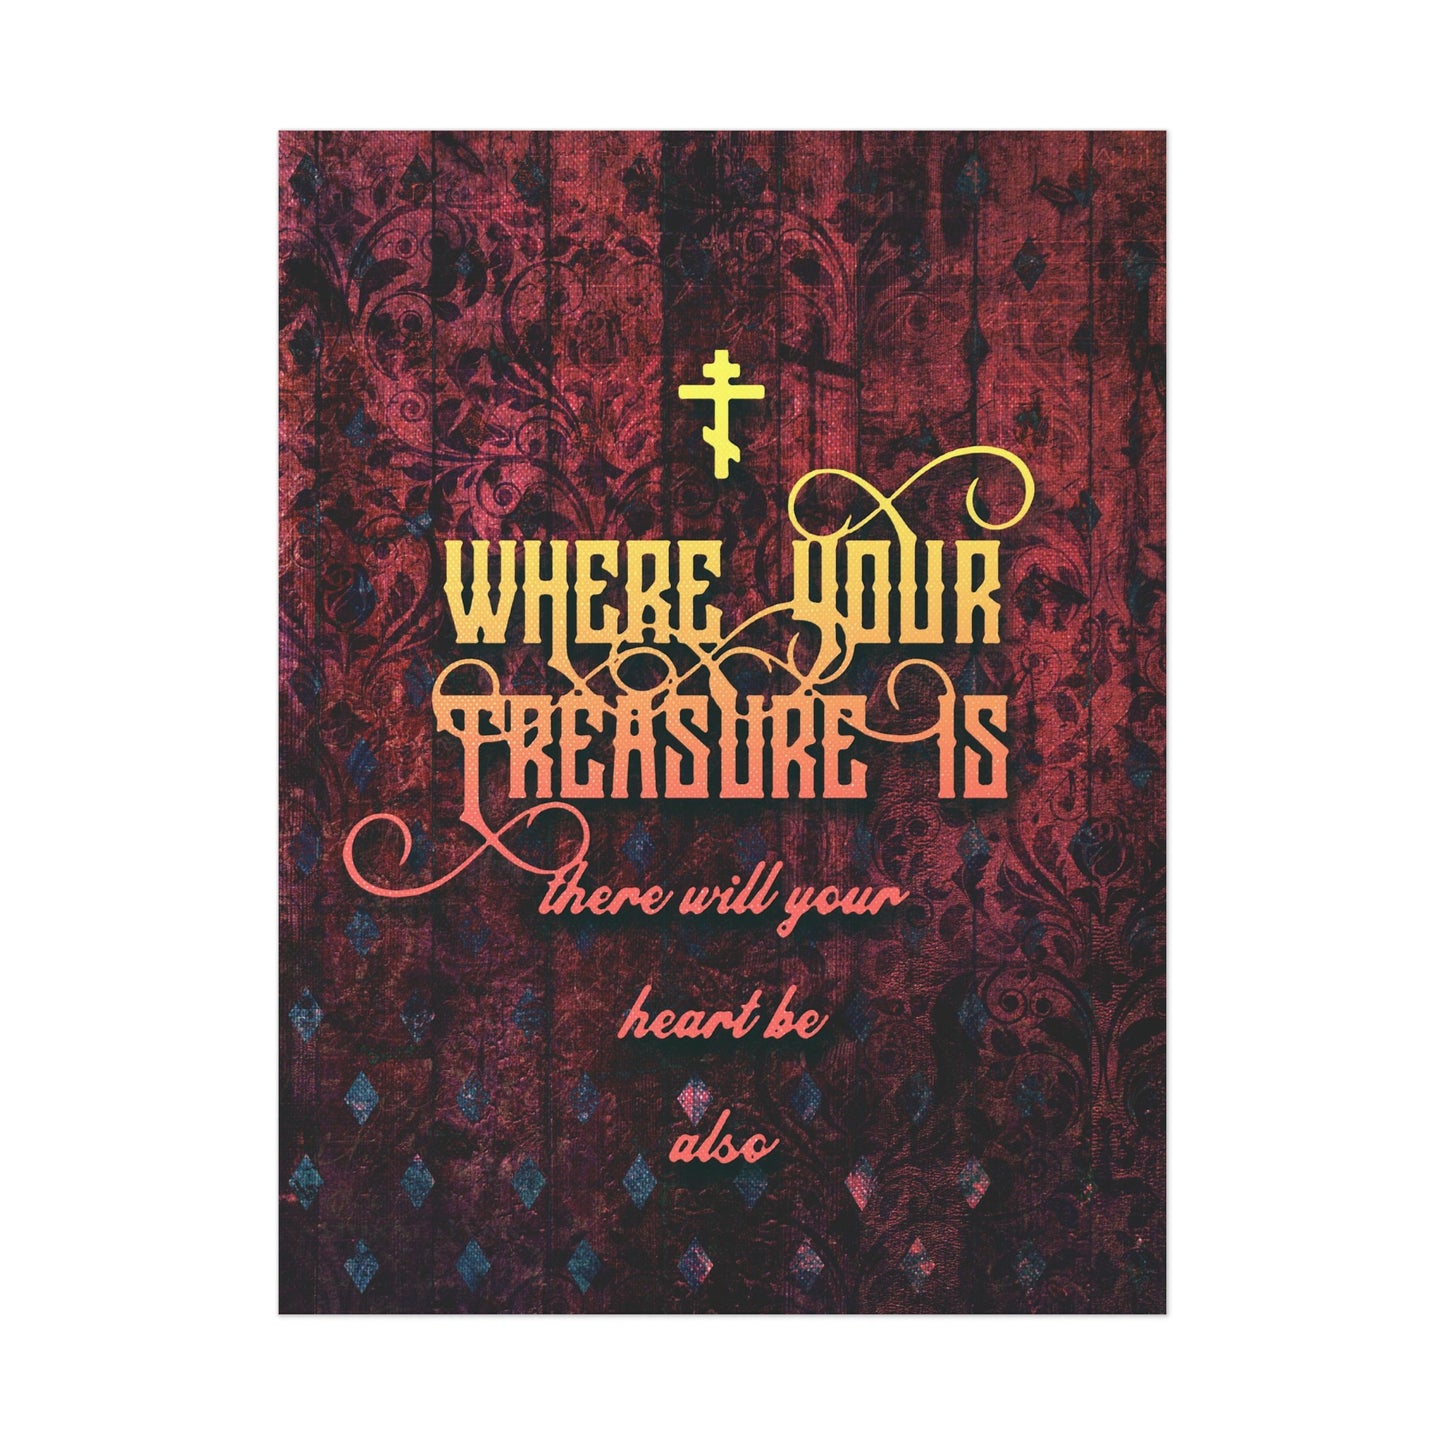 Where Your Treasure Is (Matthew 6:21) No. 1 | Orthodox Christian Art Poster